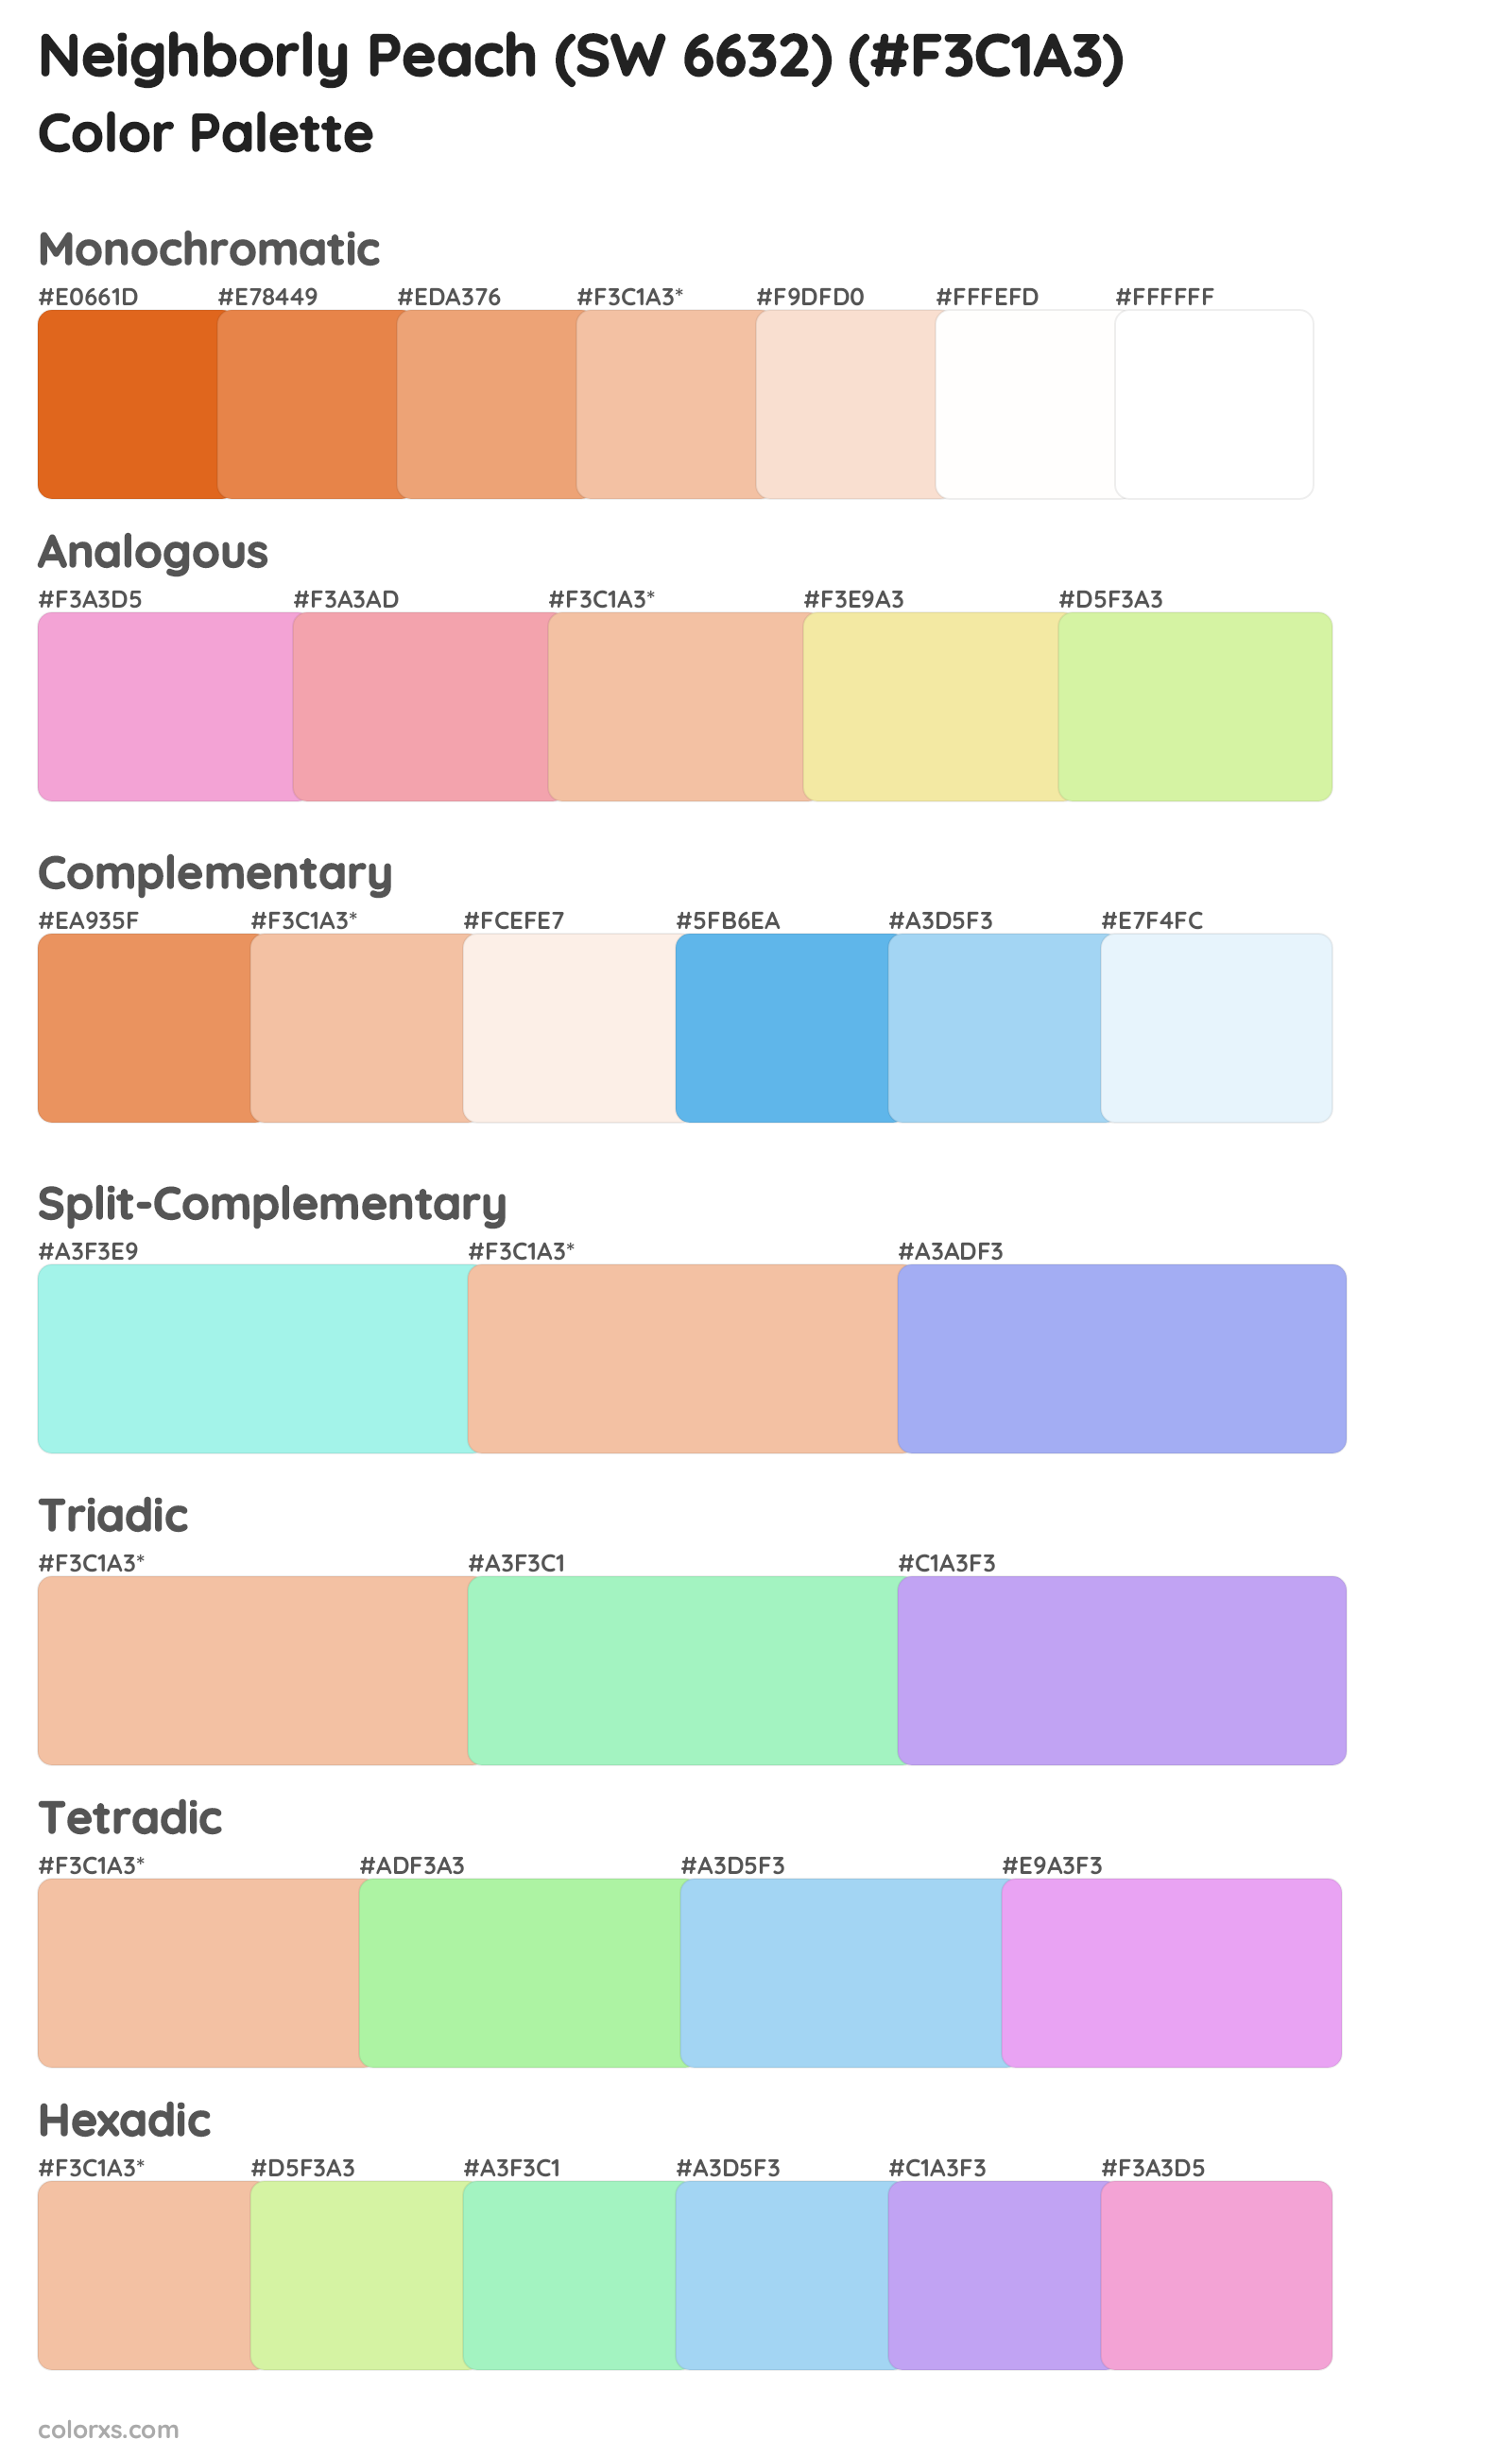 Neighborly Peach (SW 6632) Color Scheme Palettes